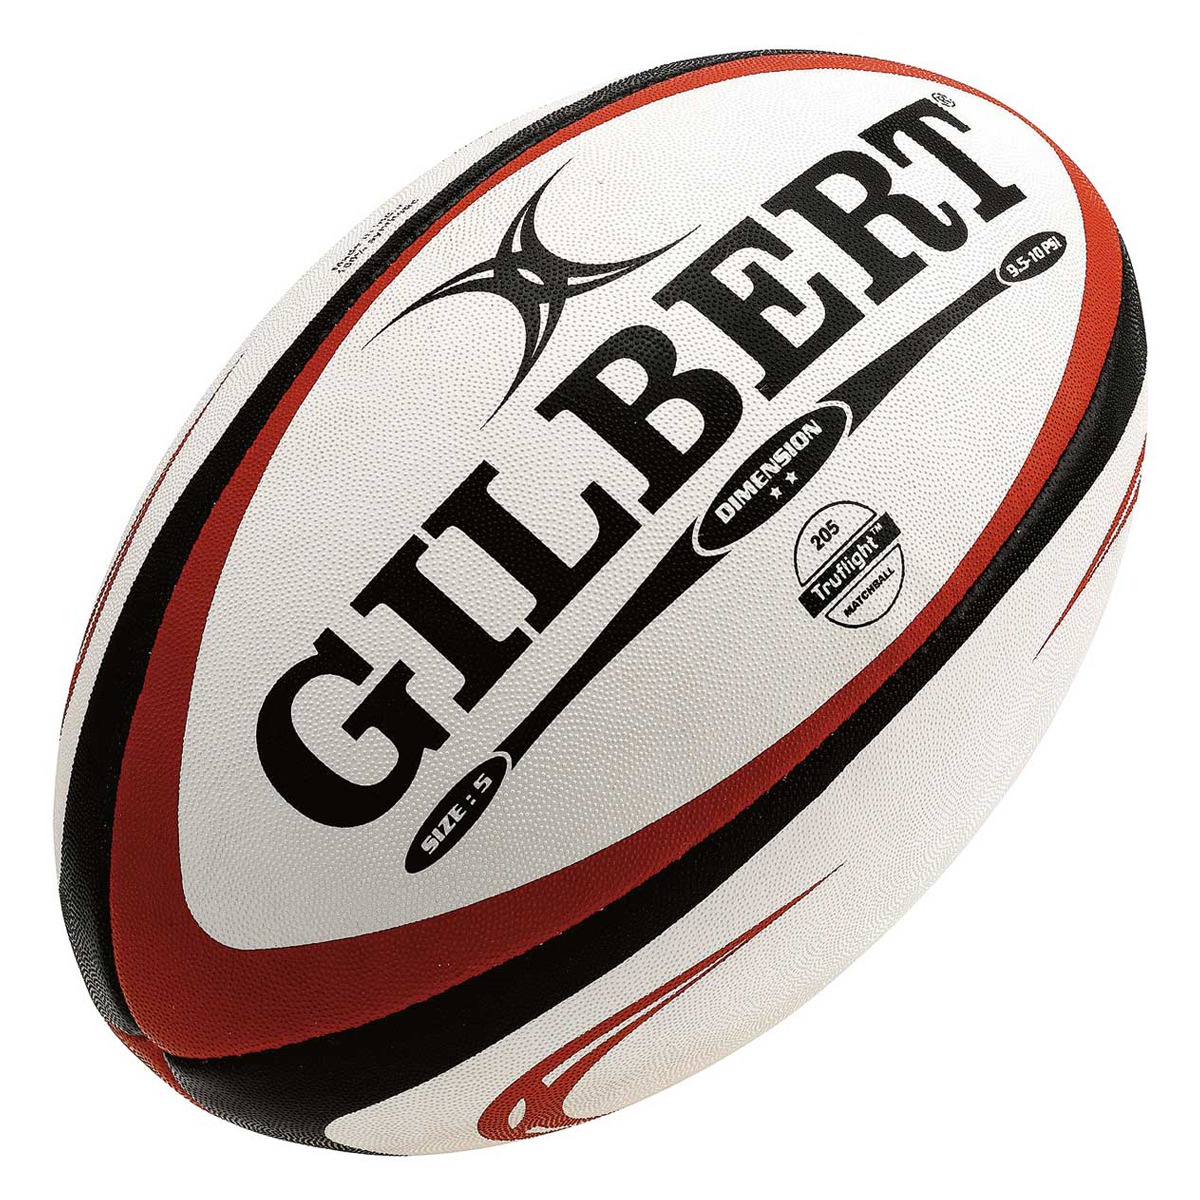 Ball clipart rugby league. Gilbert dimension union match